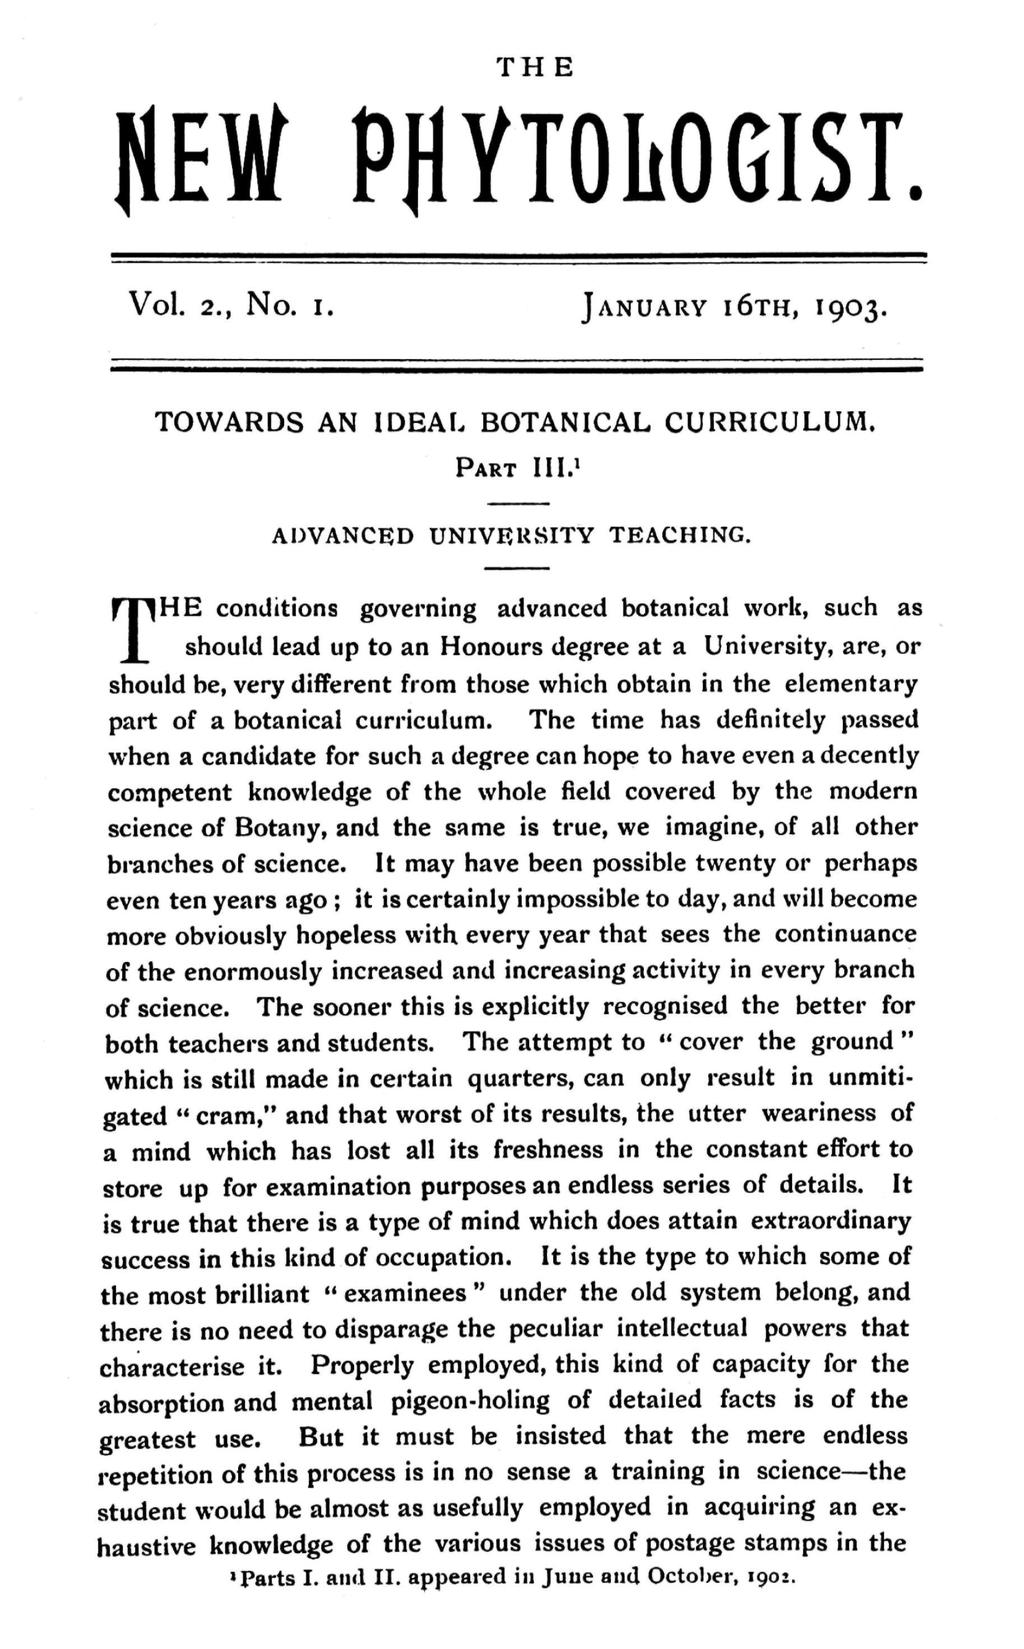 HEW THE PHYTOIiOGIST. Vol. 2., No. I. JANUARY I6TH, 1903. TOWARDS AN IDEAL BOTANICAL CURRICULUM. PART III.' ADVANCED UNIVRKSITY TEACHING.